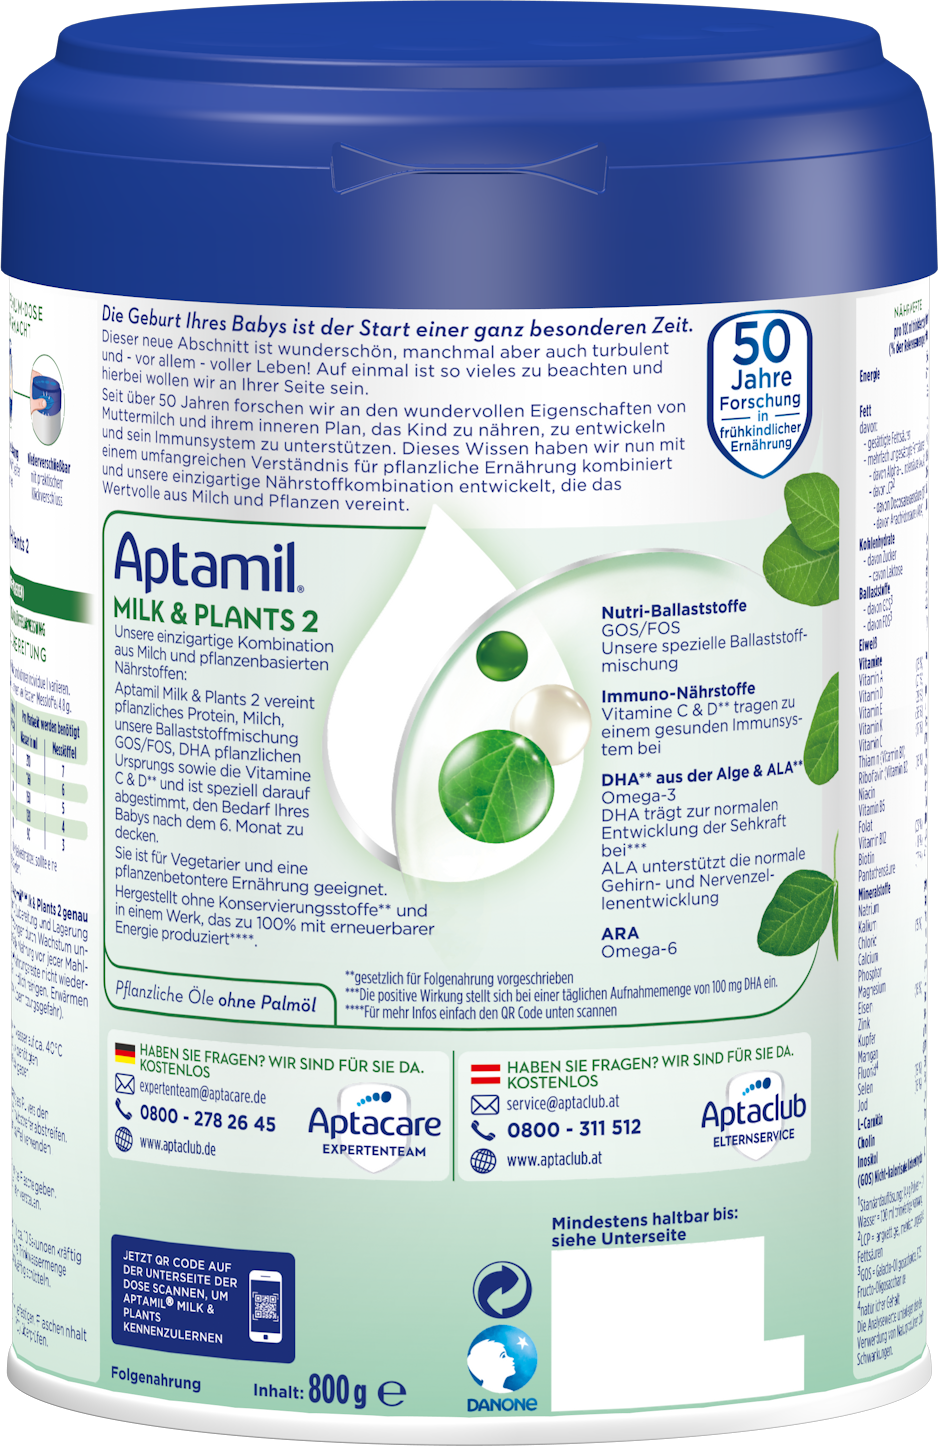 Aptamil Milk & Plants 2